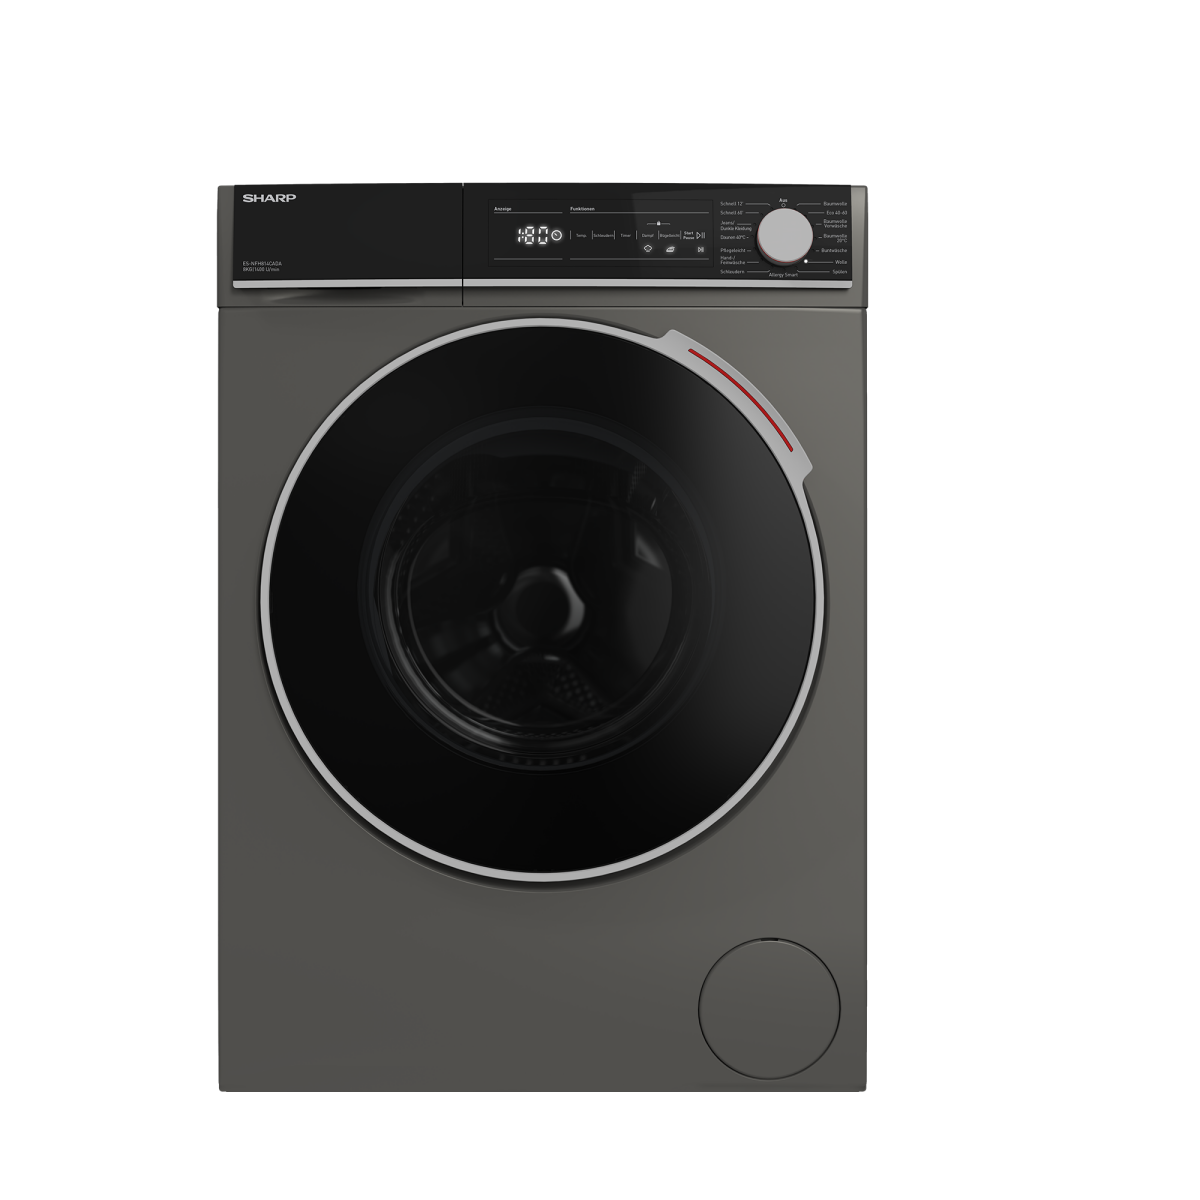 Sharp ES-NFH814CADA-DE Waschmaschine, 979,00 EUR